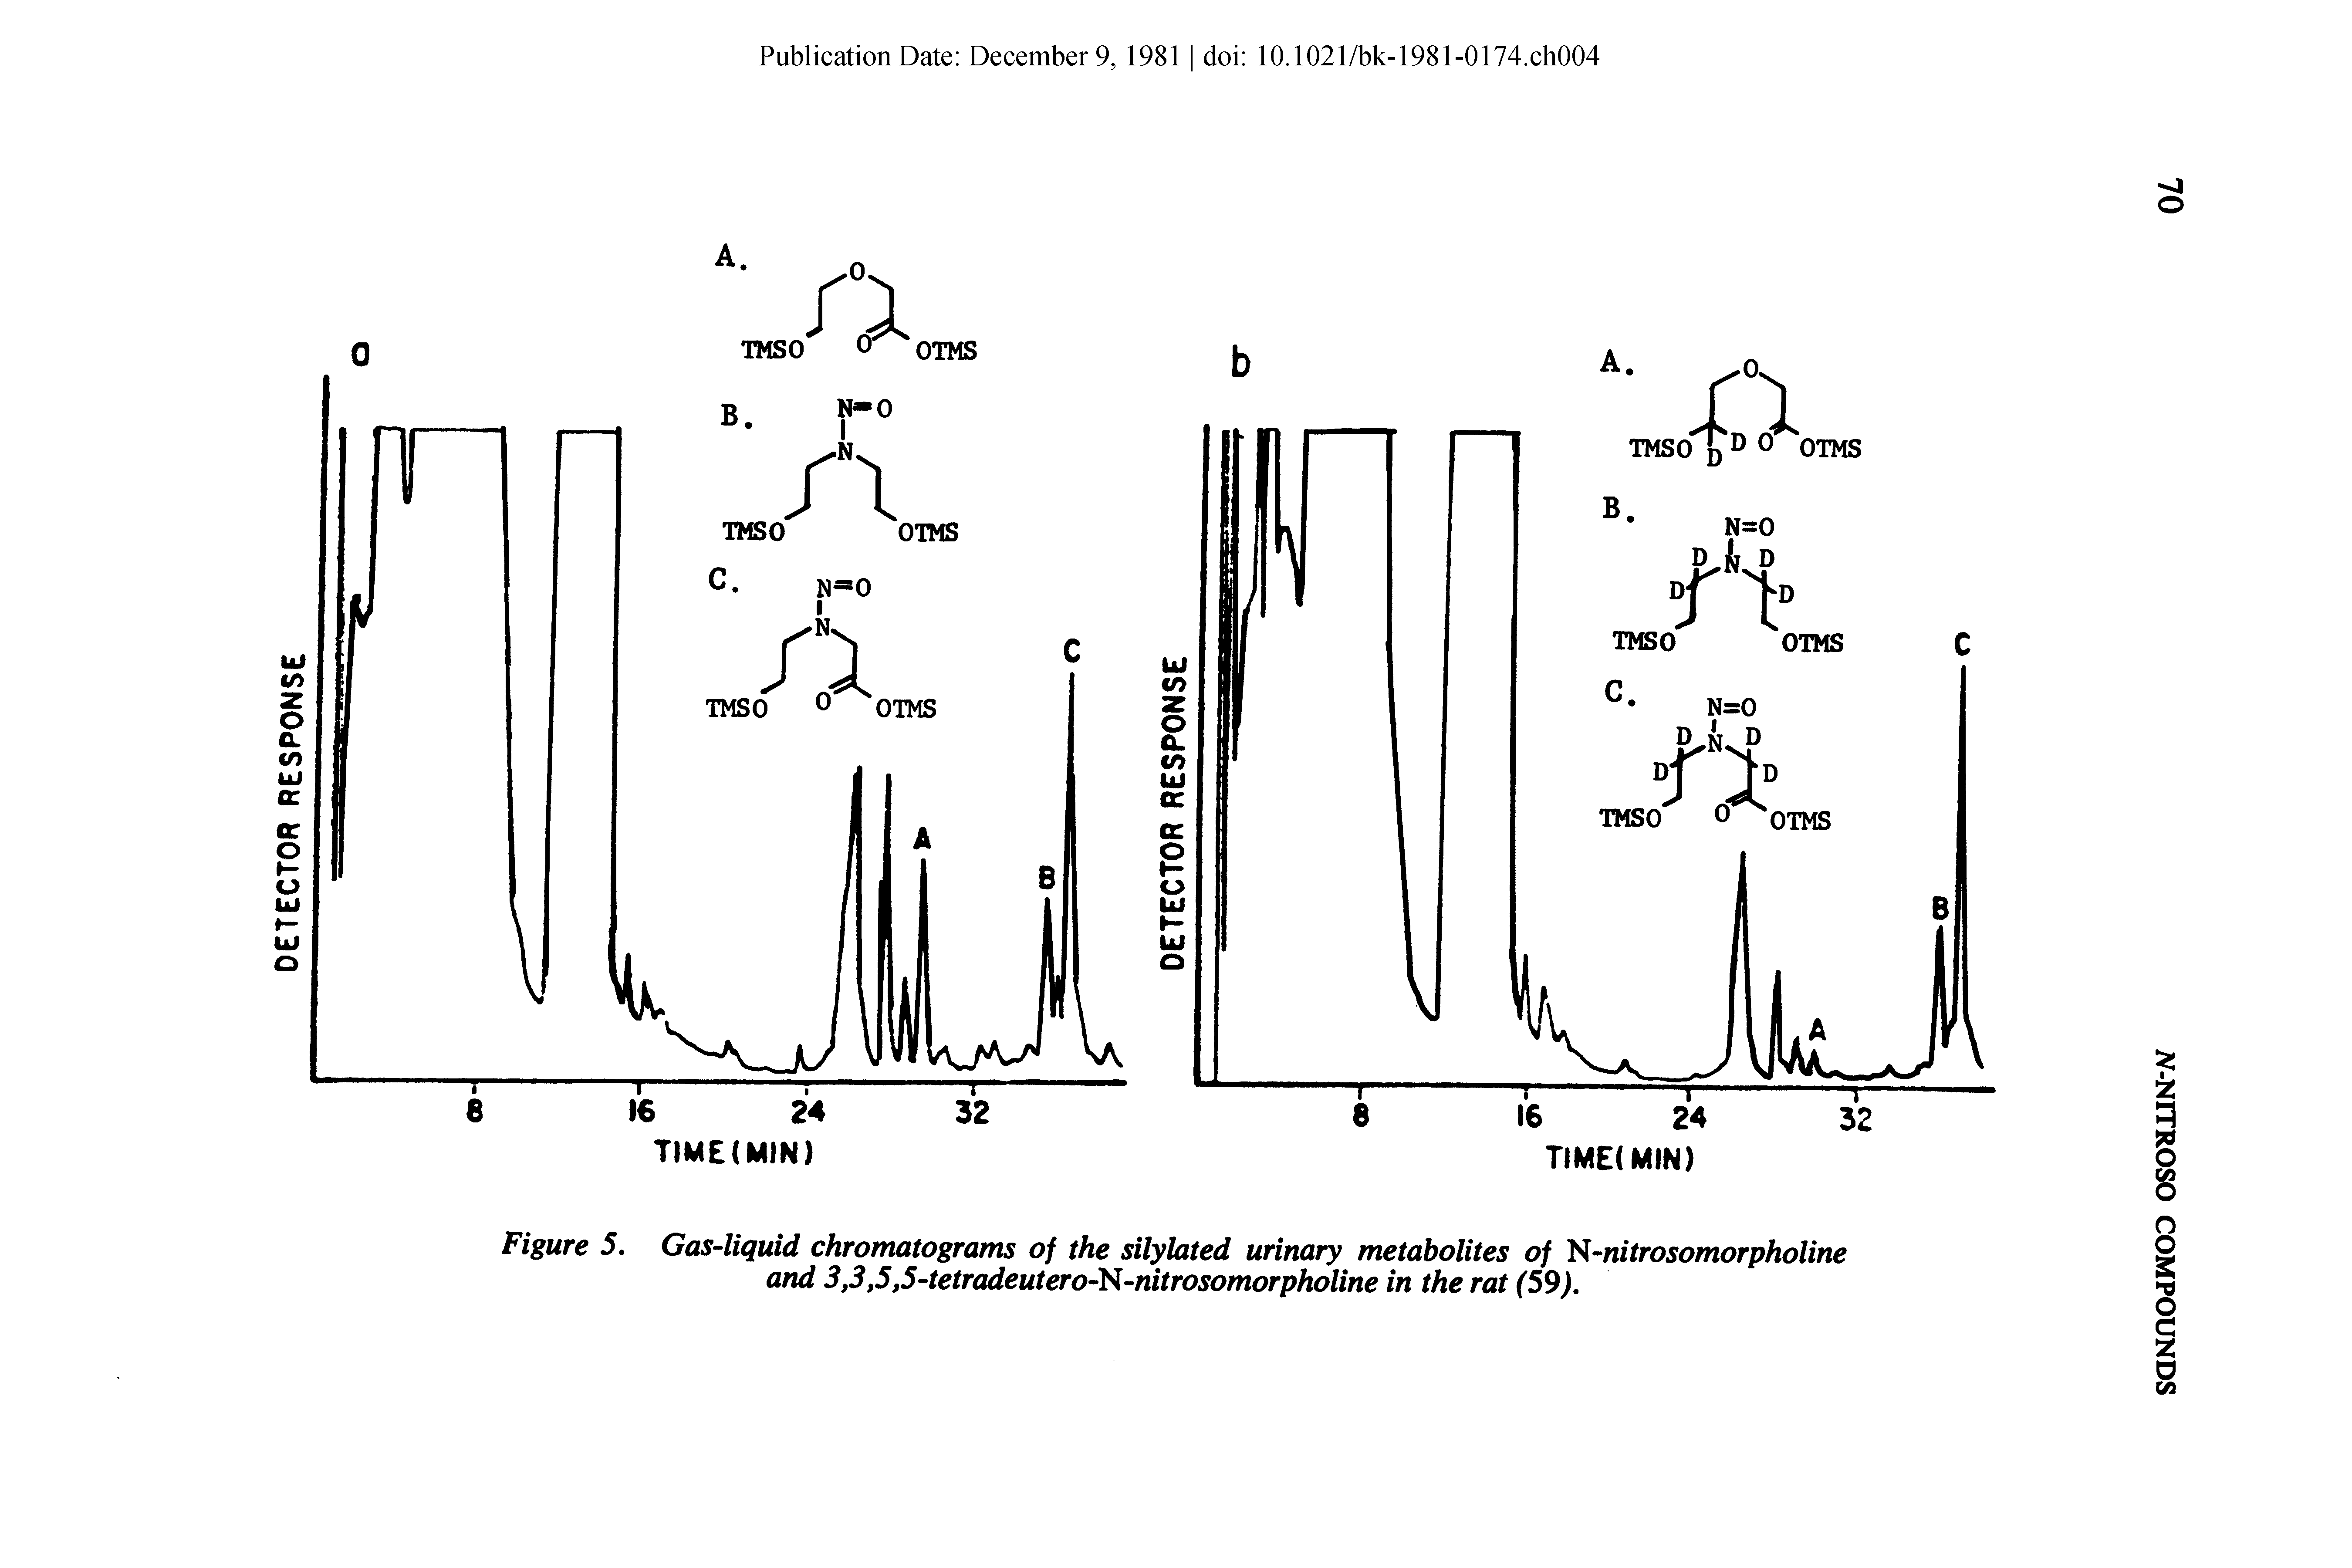 Figure 5. Gas-liquid chromatograms of the silylated urinary metabolites of Fl-nitrosomorpholine arul 3,3,5,5-tetradeutero- -nitrosomorpholine in the rat (59).